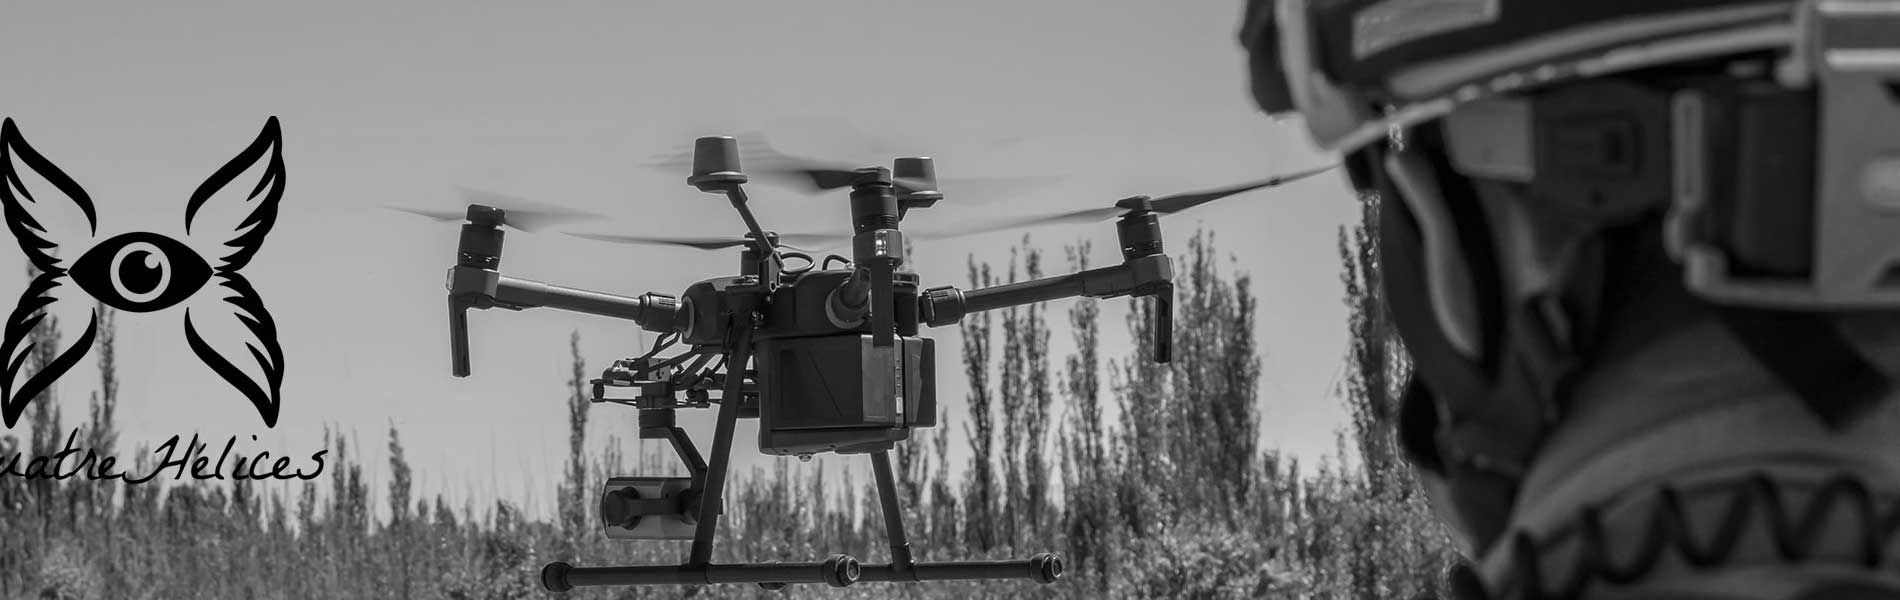 Film pilote de drone Port-De-Bouc (13110)